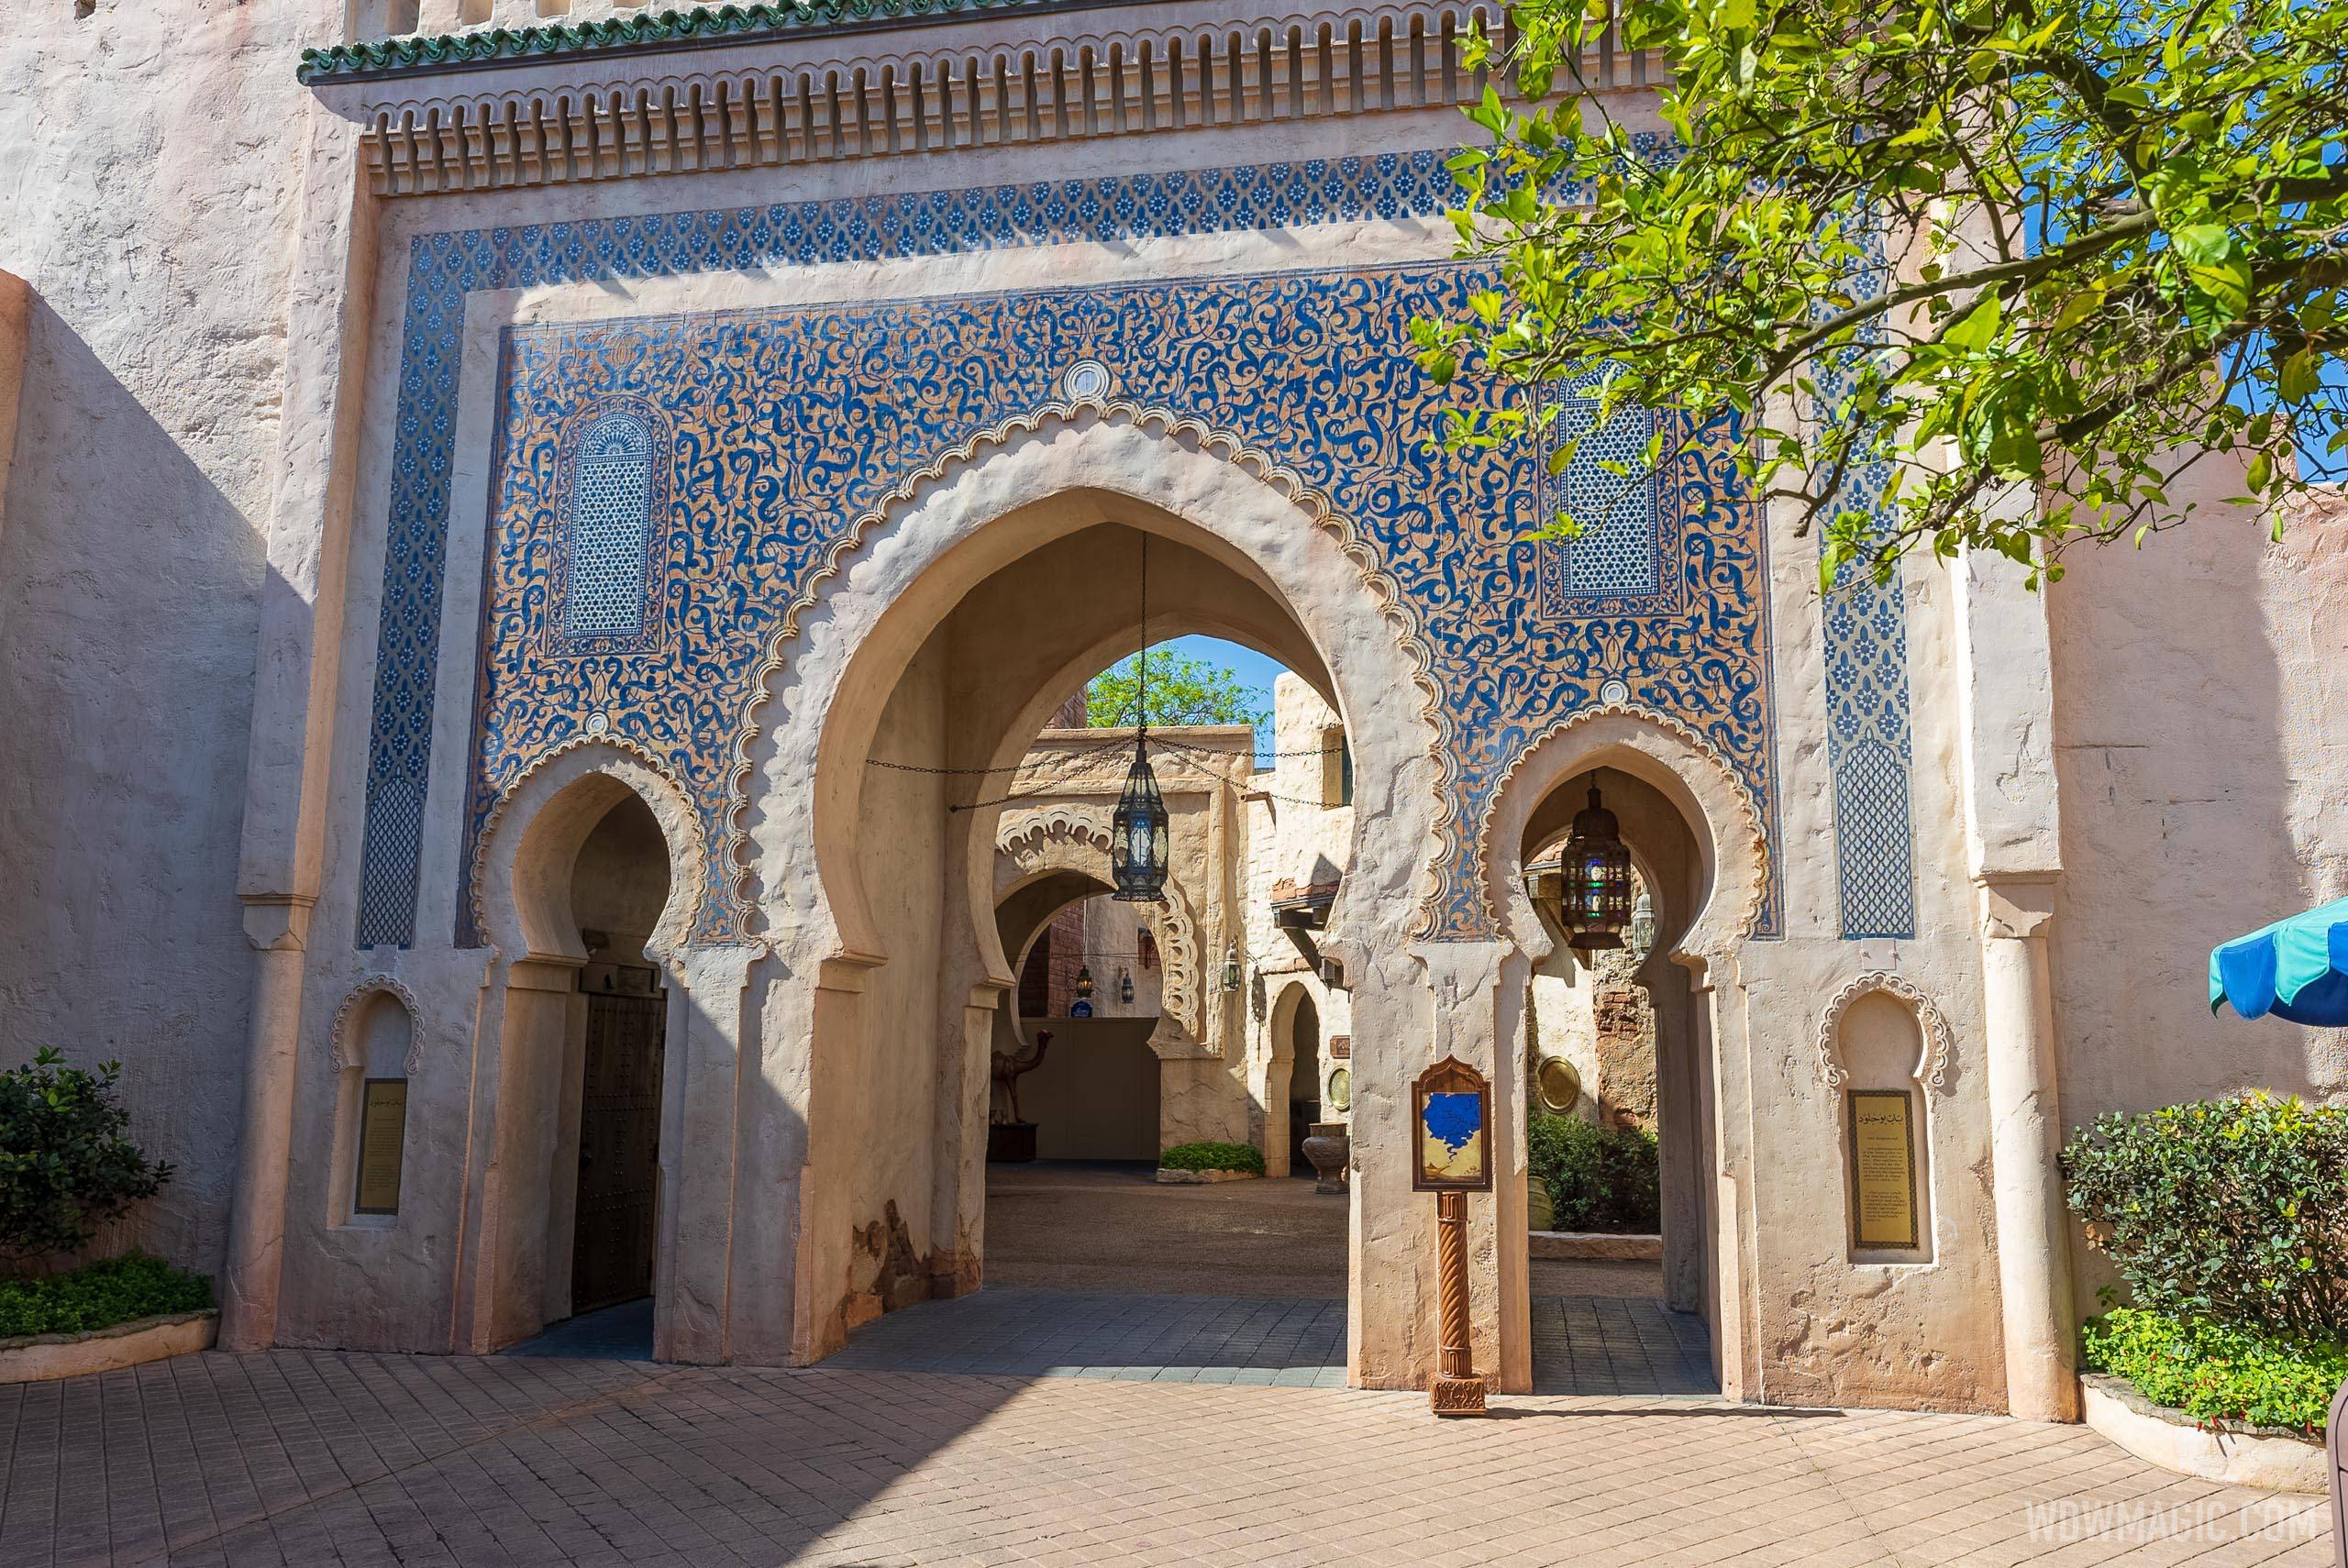 Morocco Pavilion refurbishment walls - April 5 2021